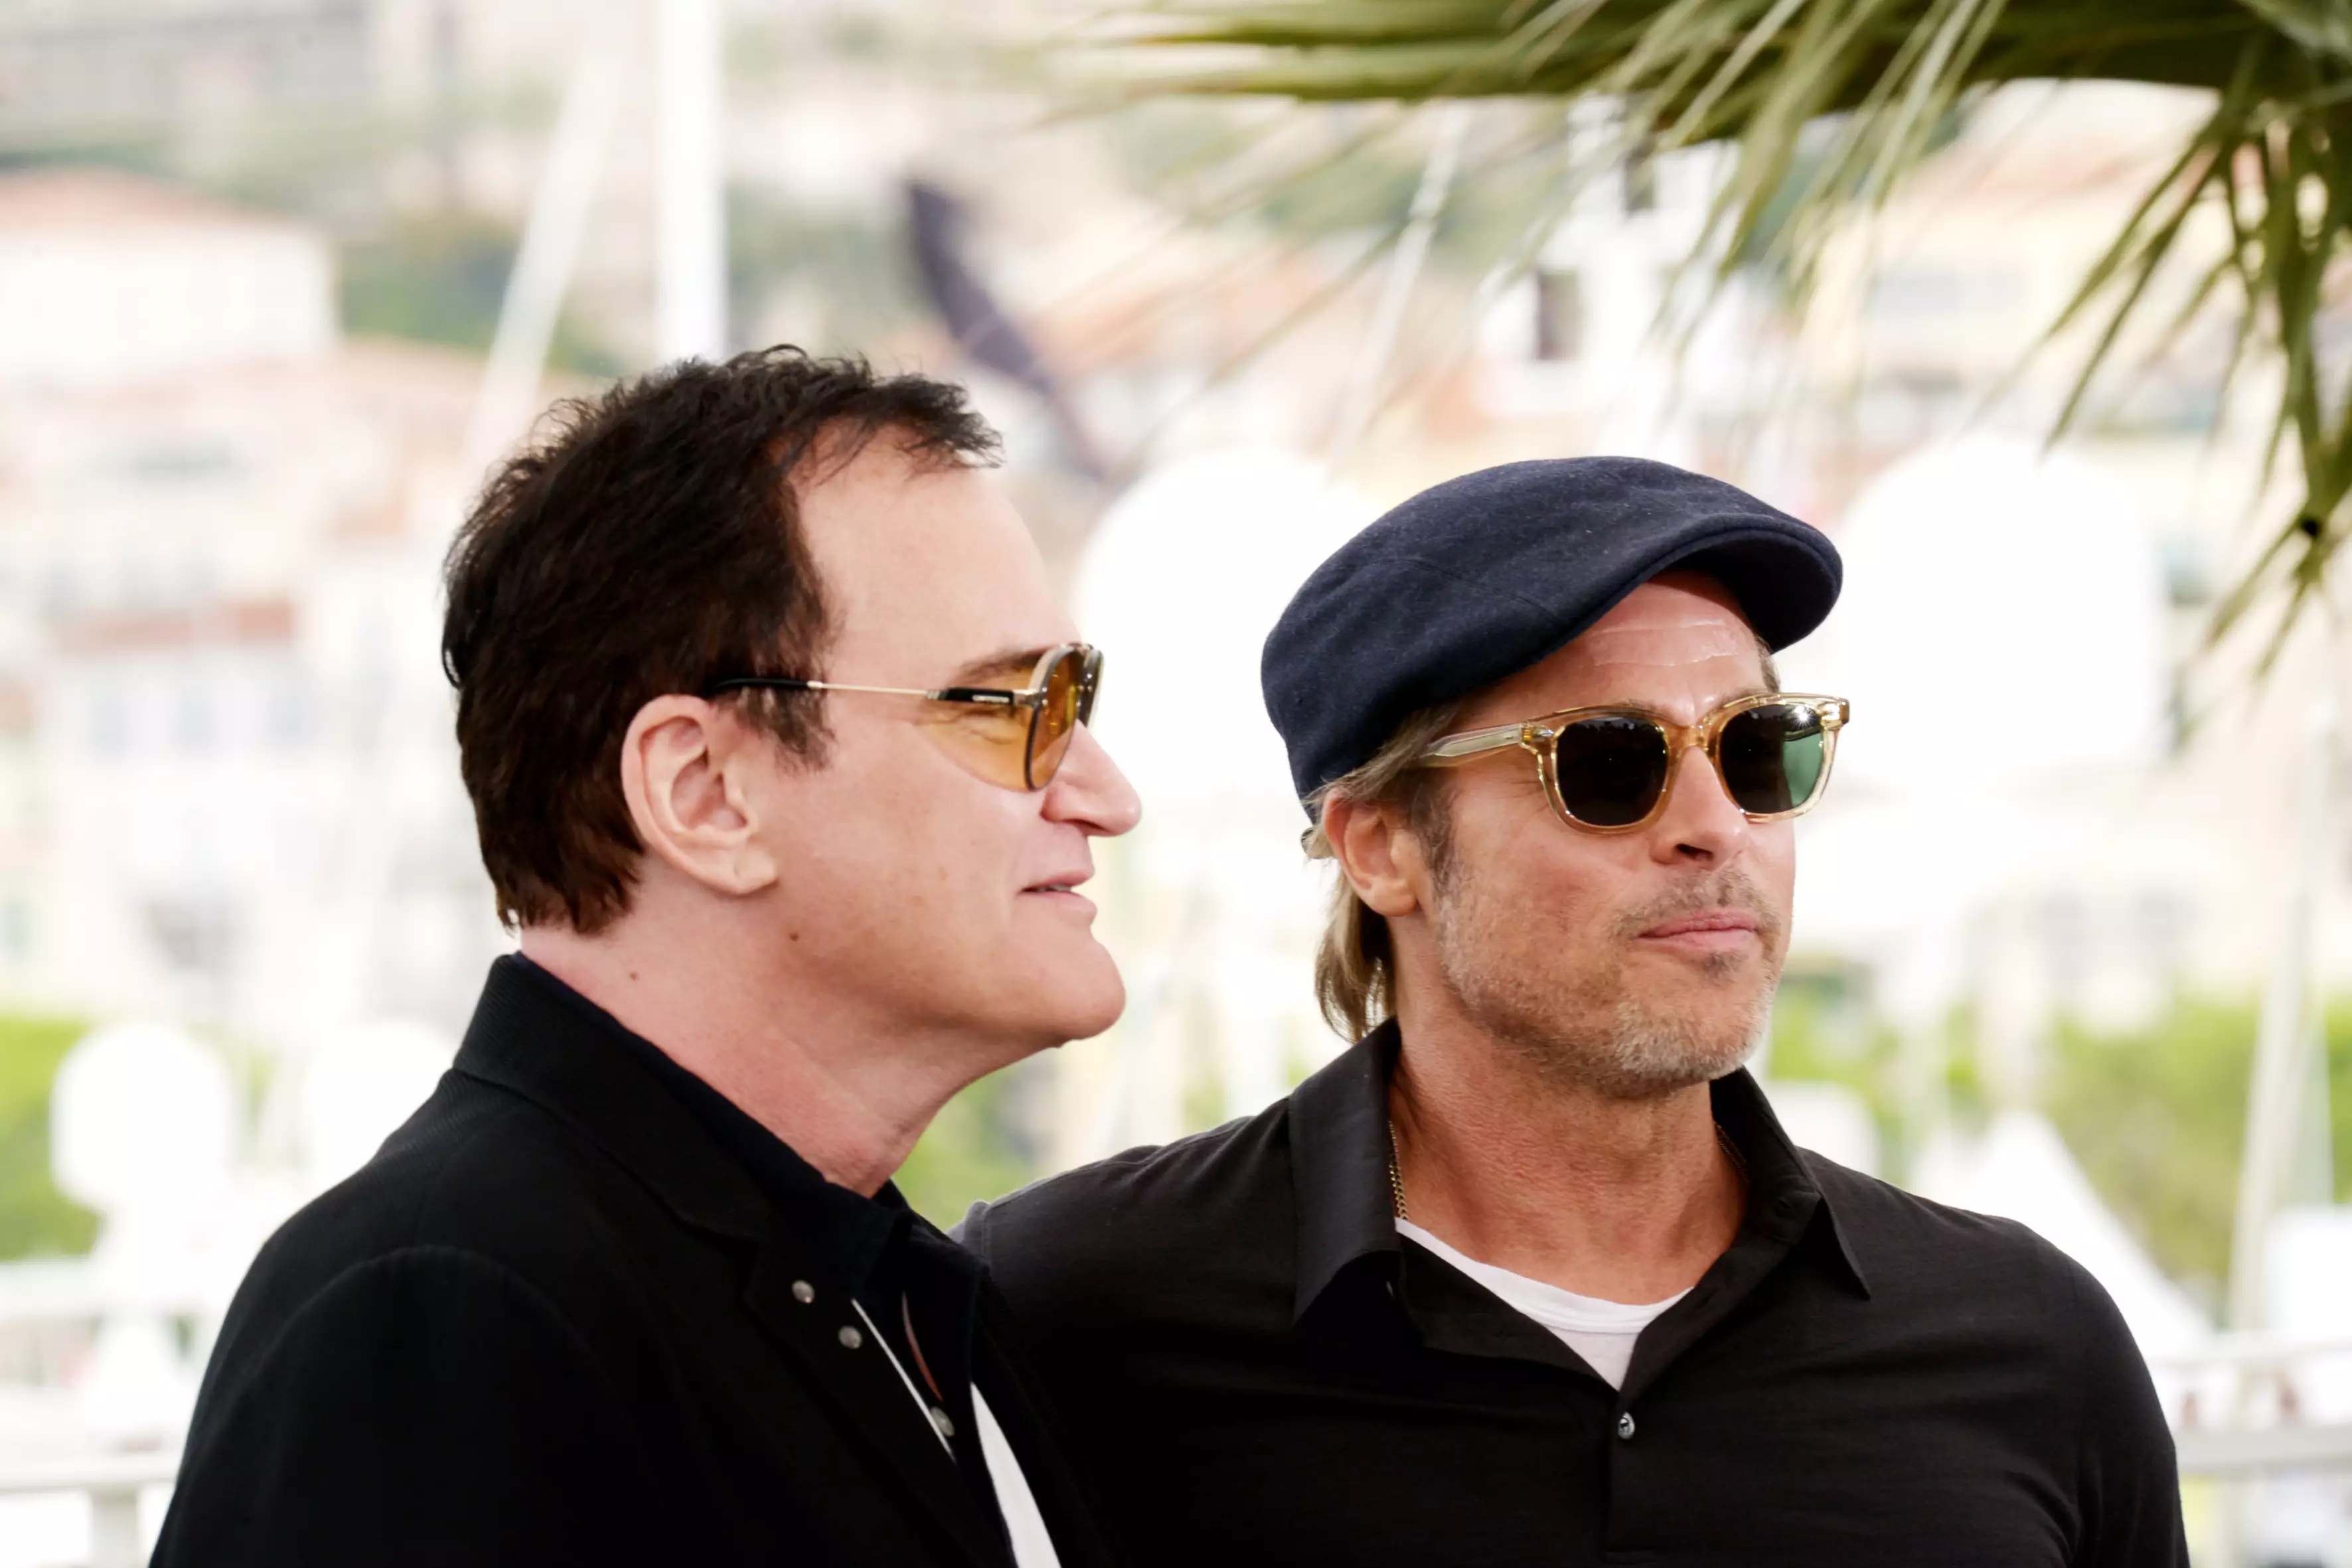 Tarantino worked with Brad Pitt on his latest film.